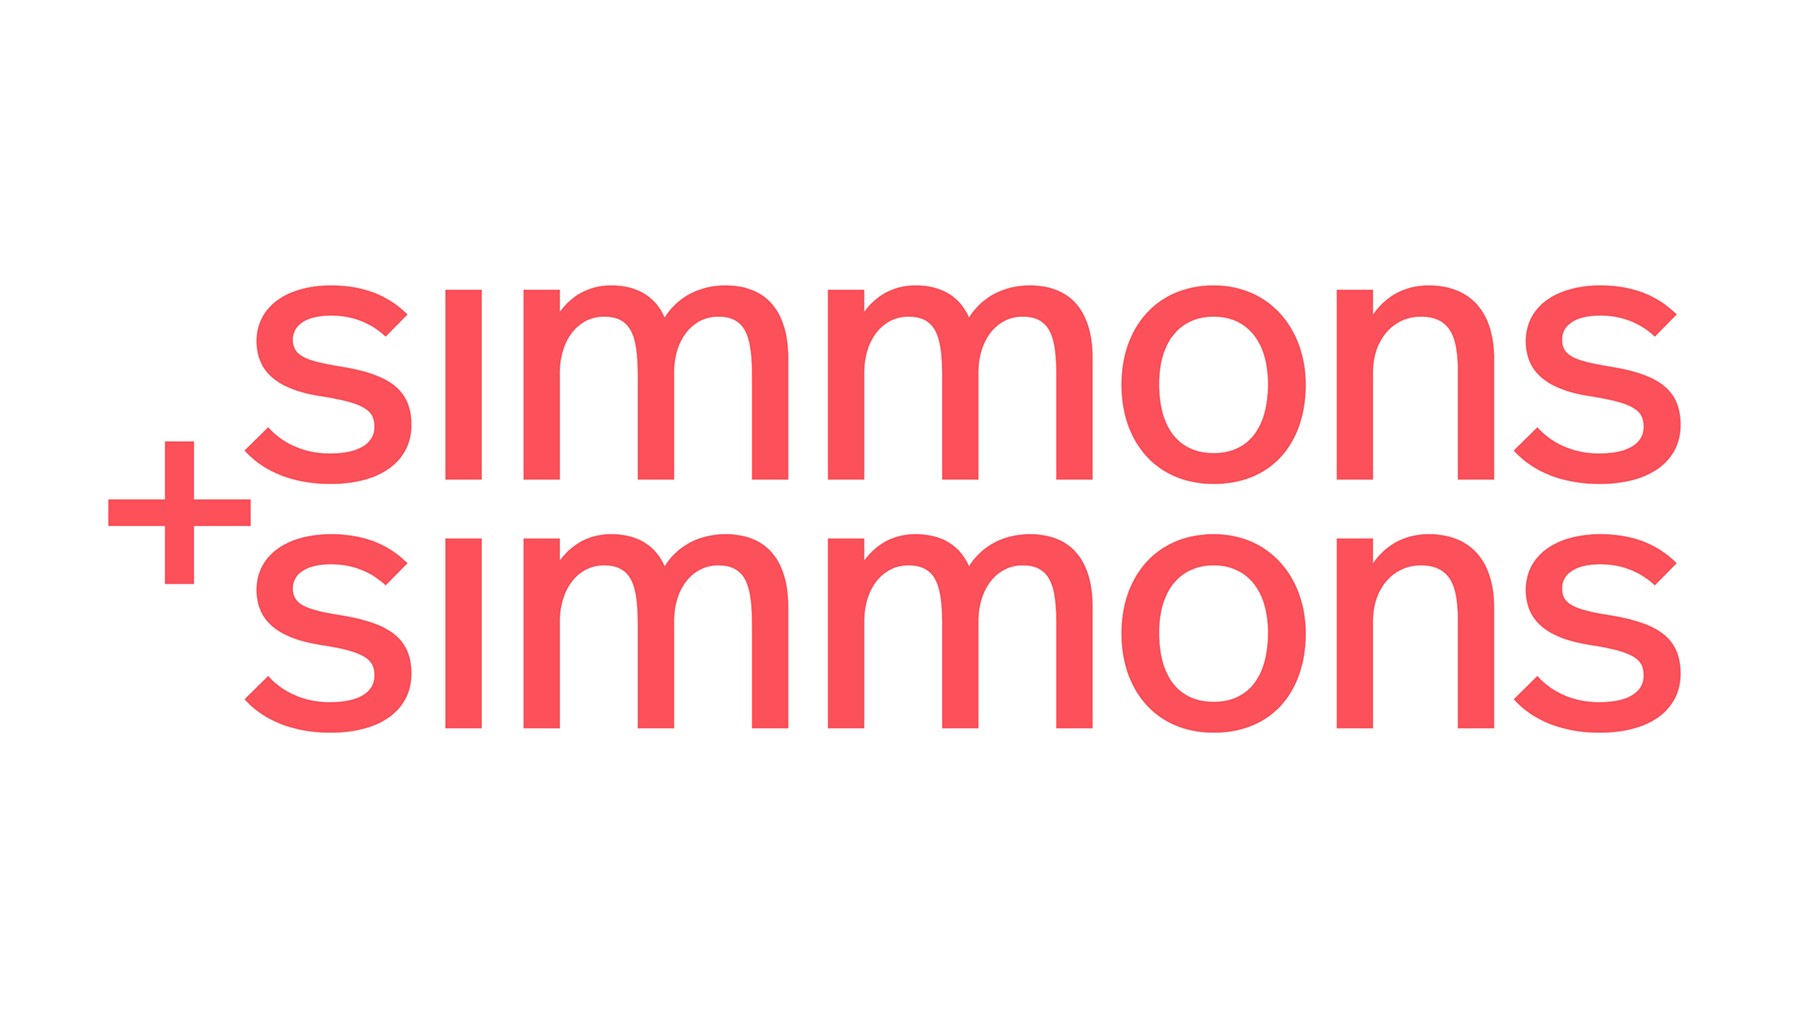 Simmons & Simmons LLP